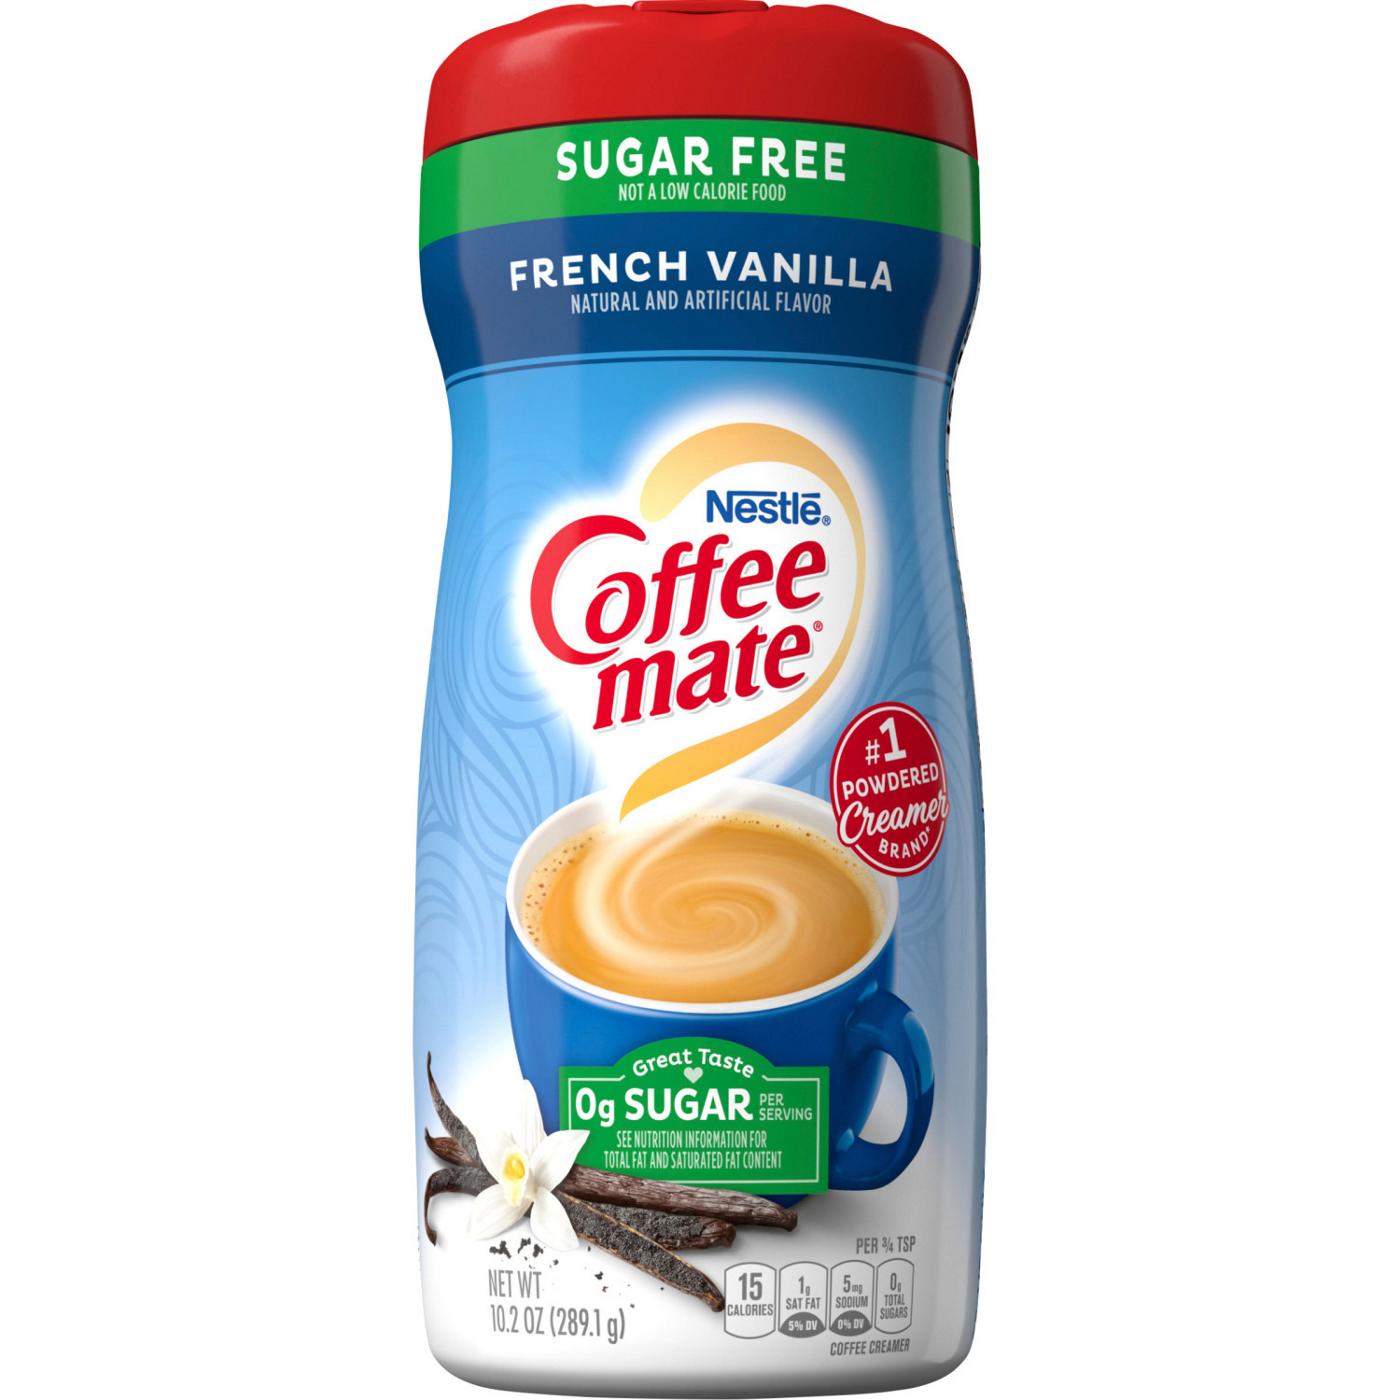 Nestle Coffee Mate French Vanilla Sugar Free Powder Coffee Creamer; image 3 of 9